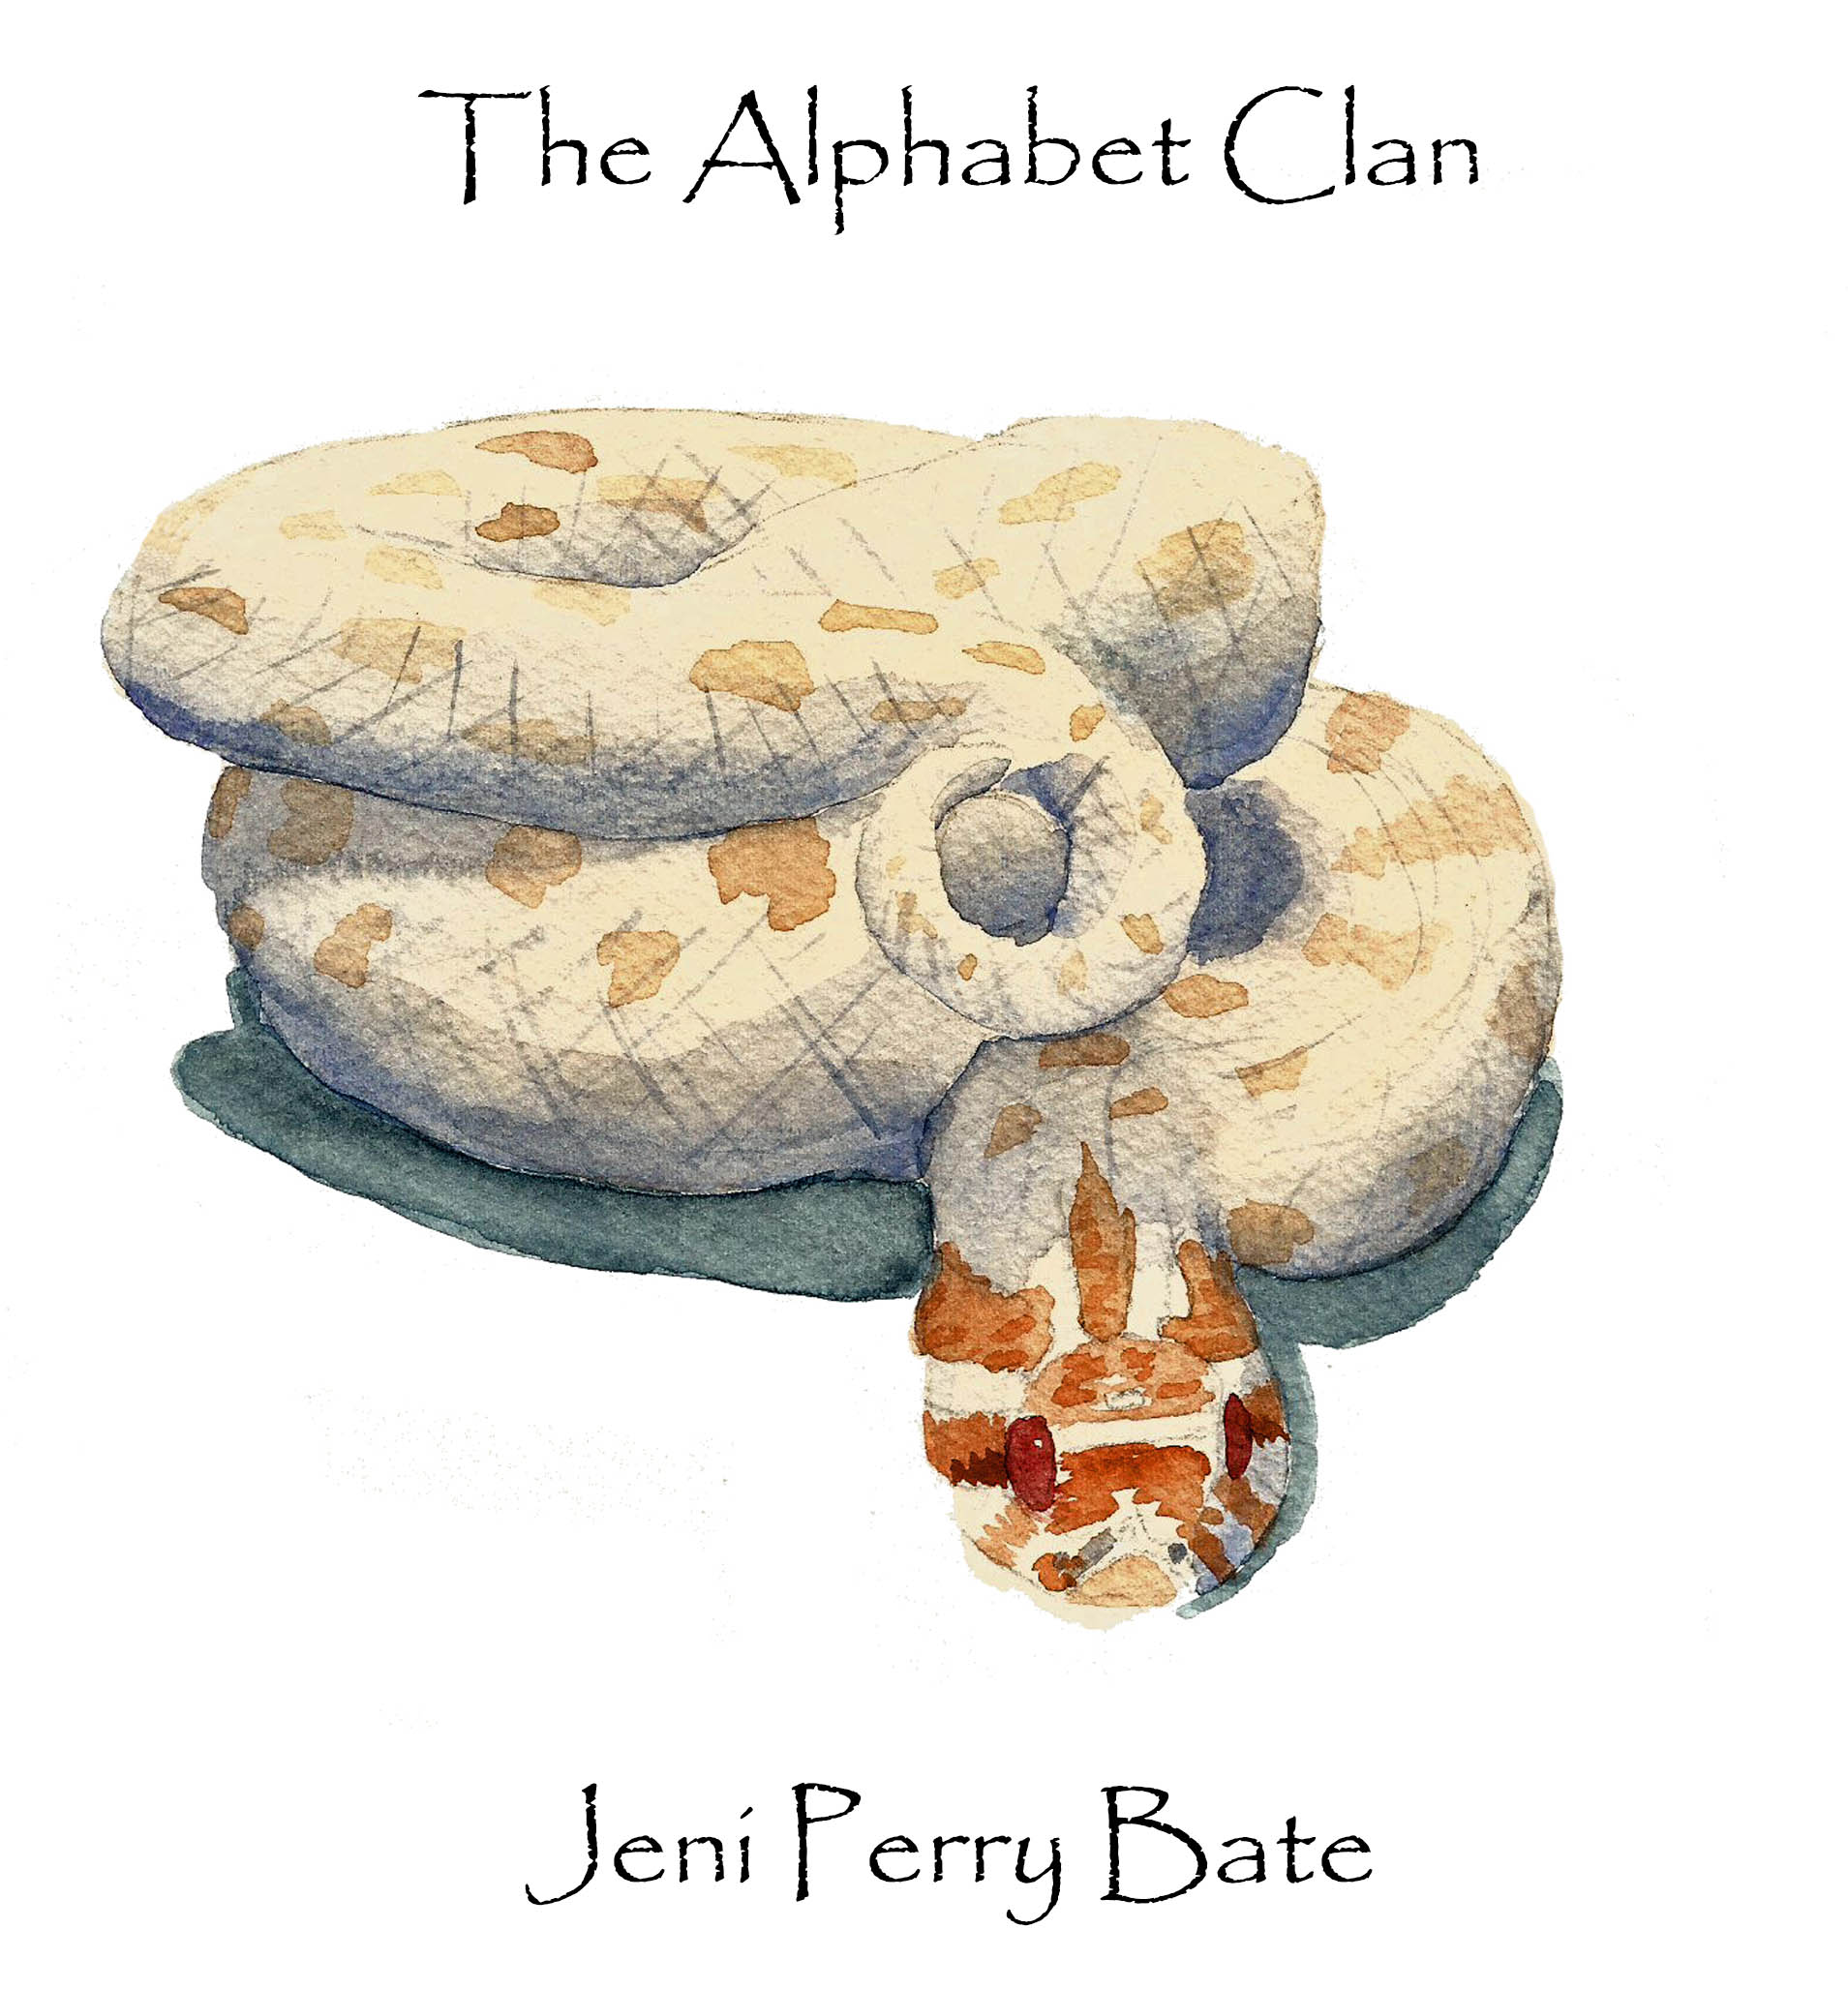 The Alphabet Clan